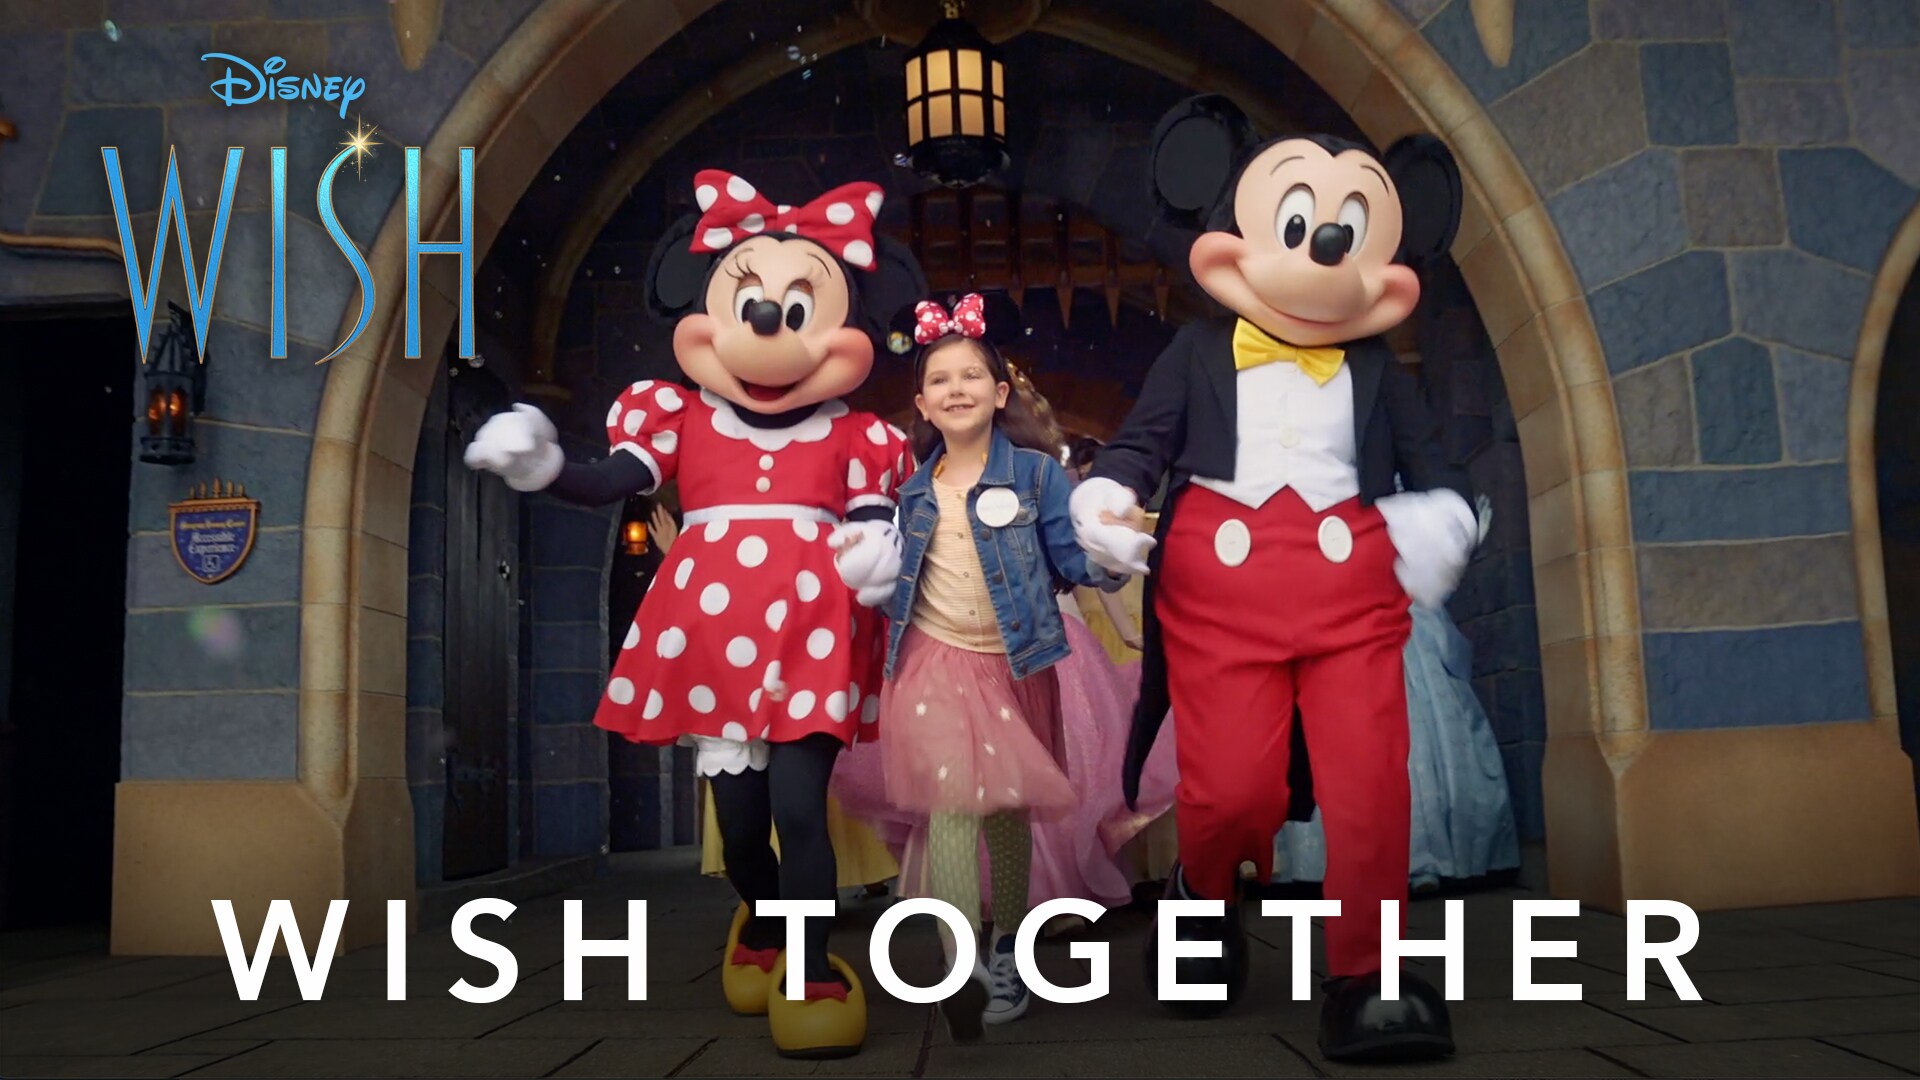 Disney's Wish | Wish Together